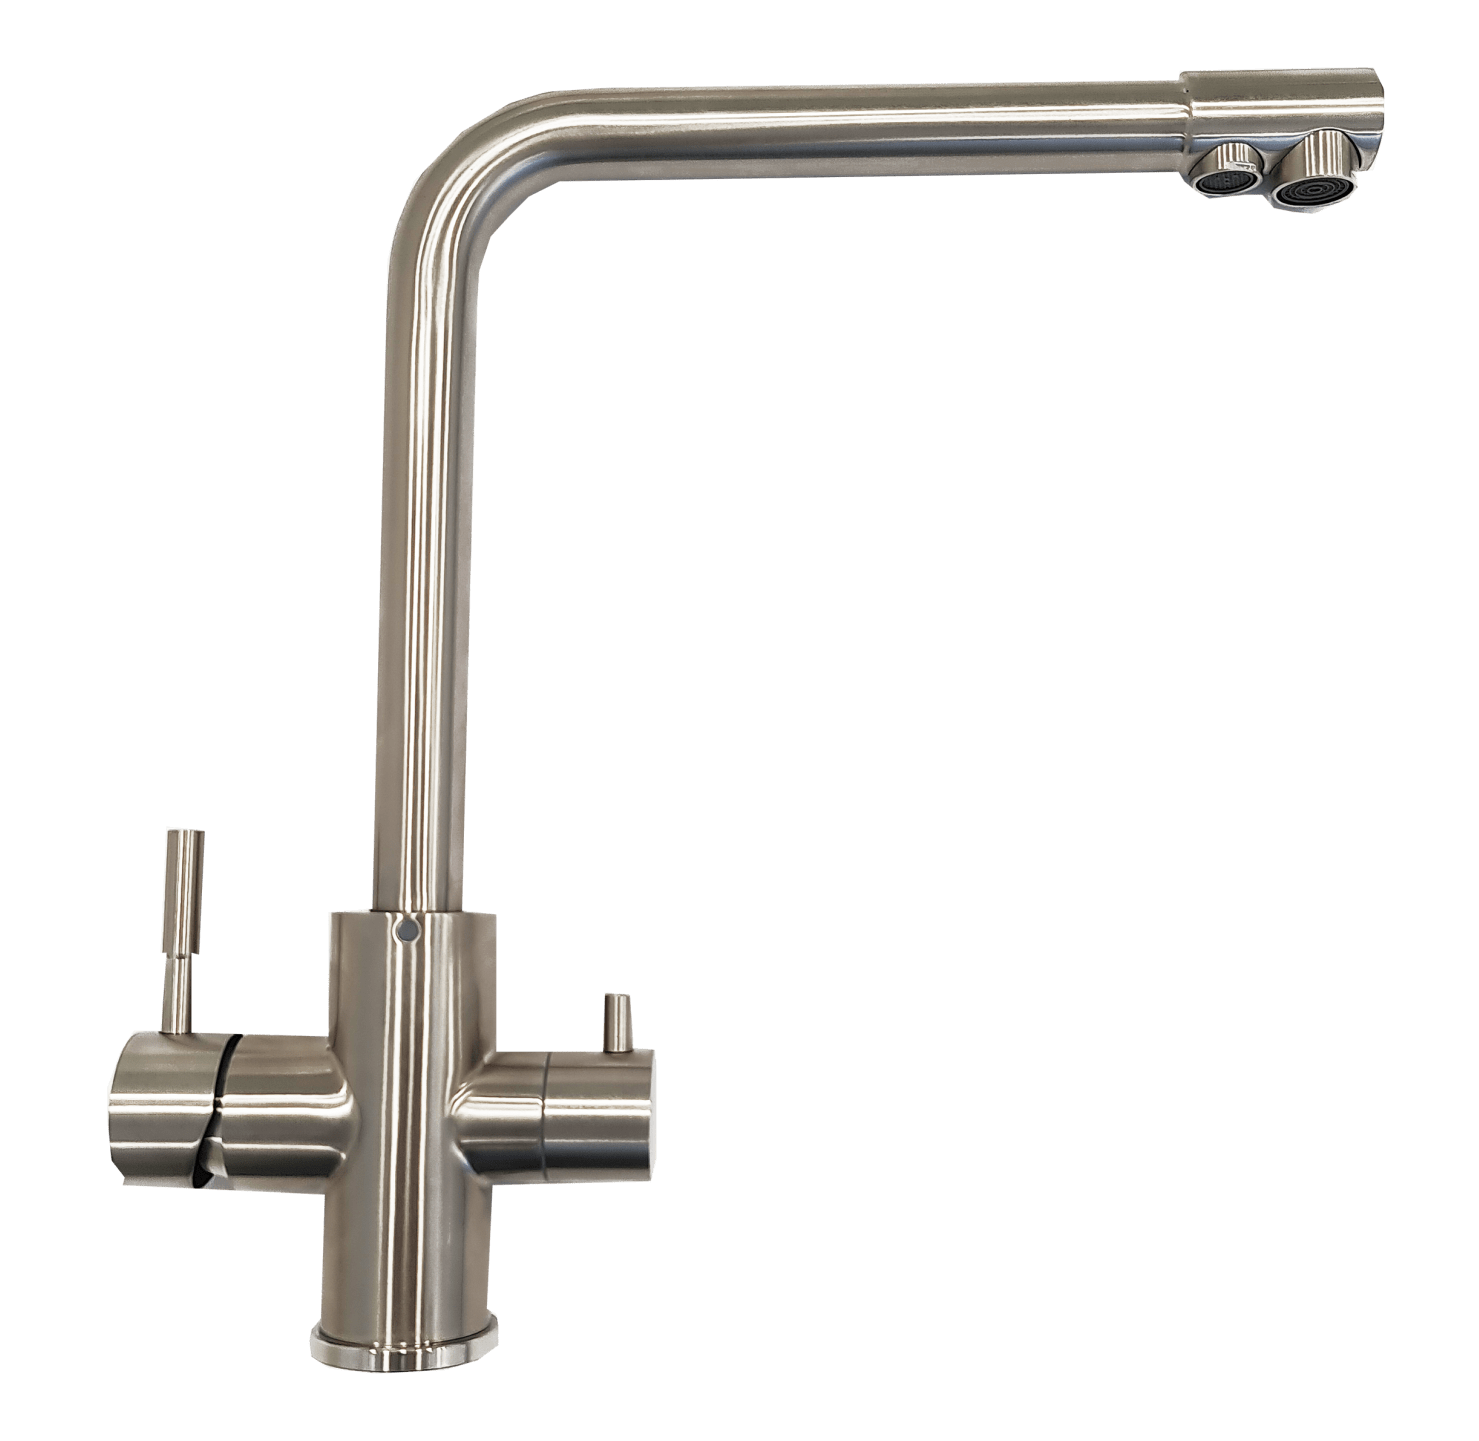 Stainless steel triple tap